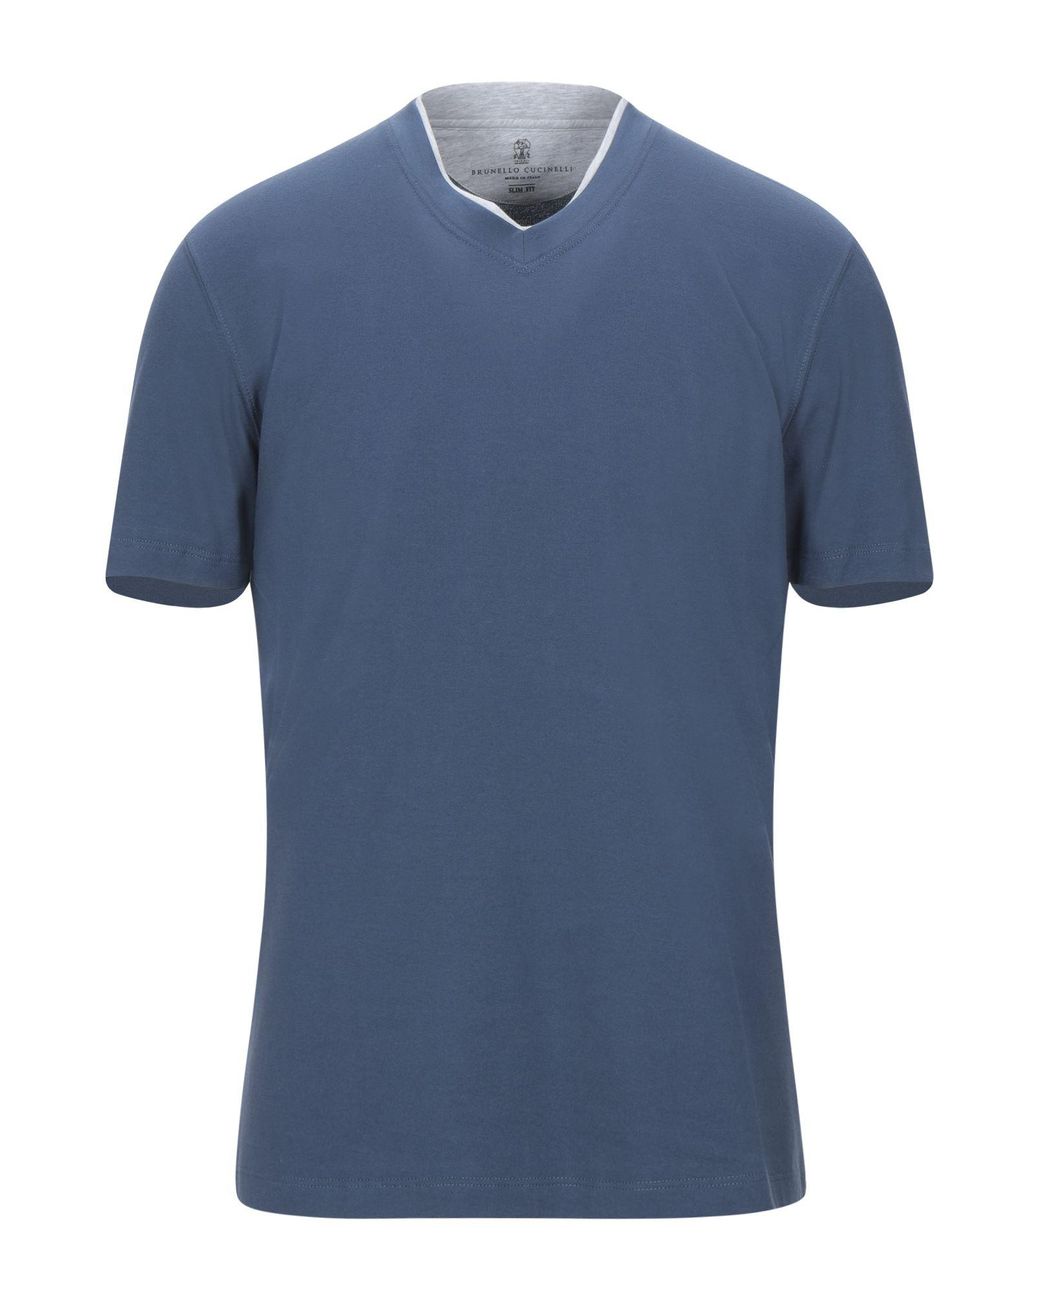 Brunello Cucinelli T-shirt in Slate Blue (Blue) for Men - Lyst